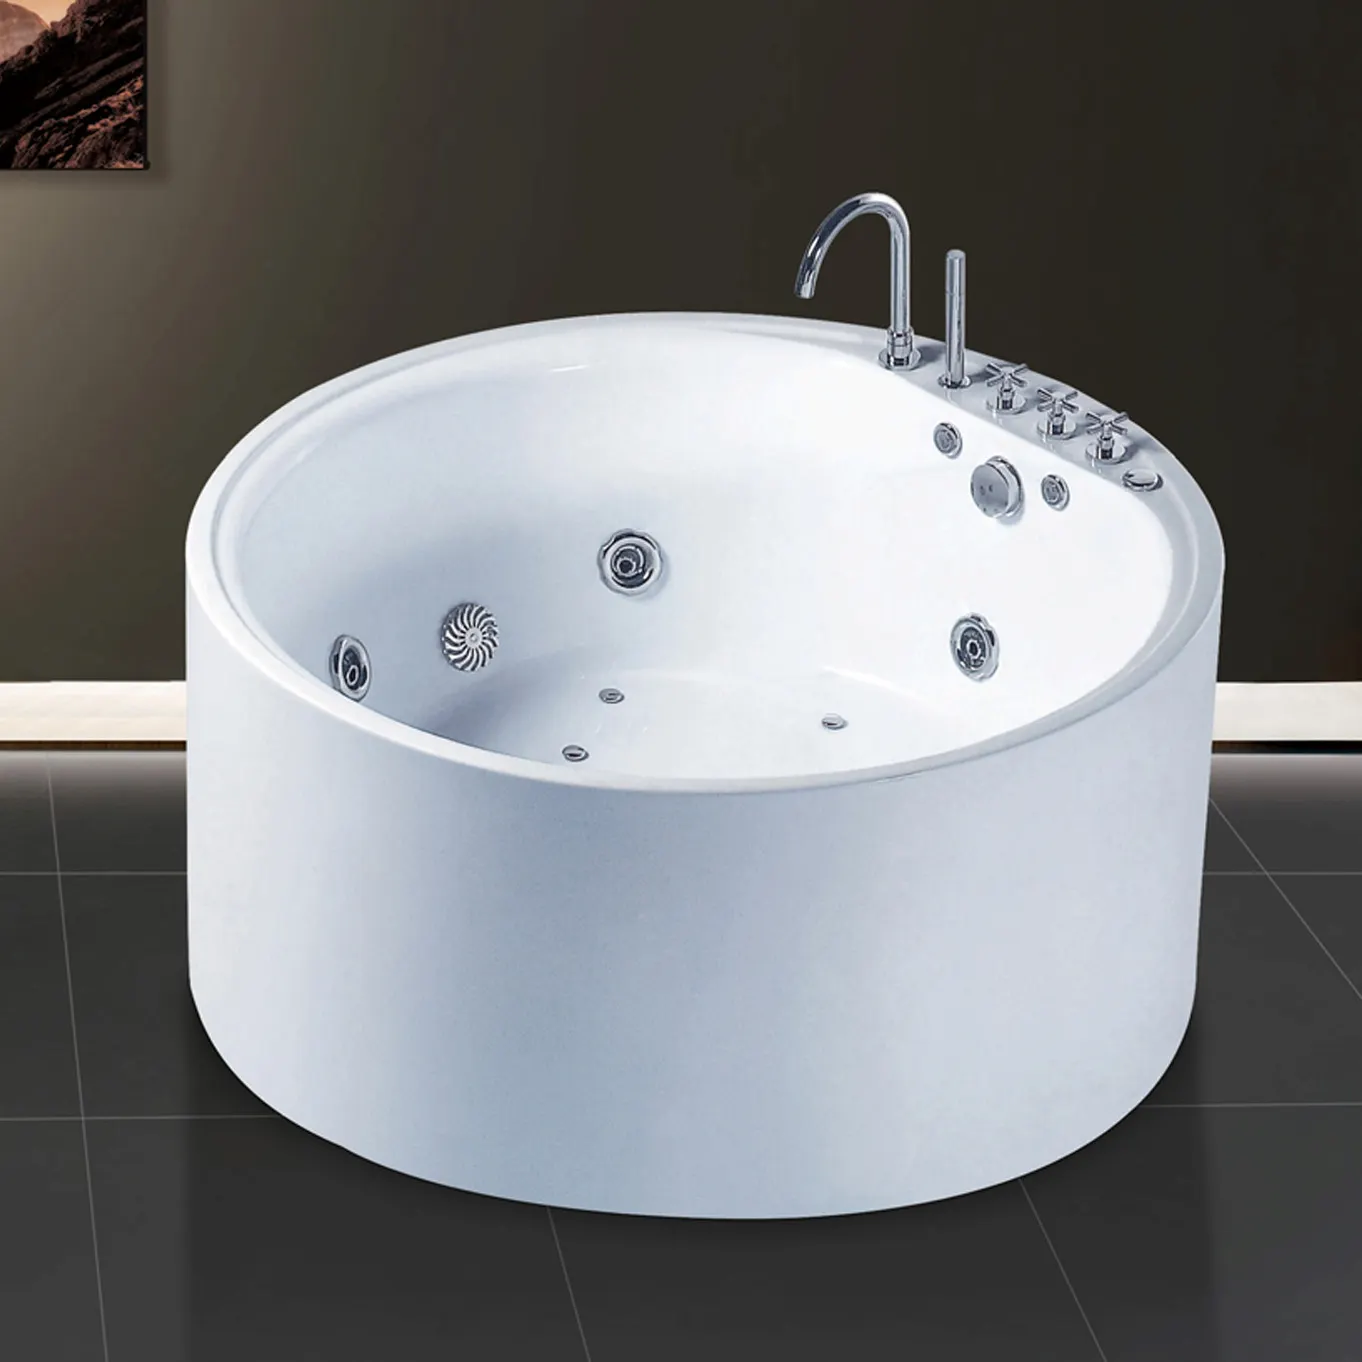 राउंड ऐक्रेलिक बाथटब बबवंडर टब उच्च स्नान टब होटल बाथरूम बाथरूम अनुकूलित गोल आकार के मुक्त खड़े